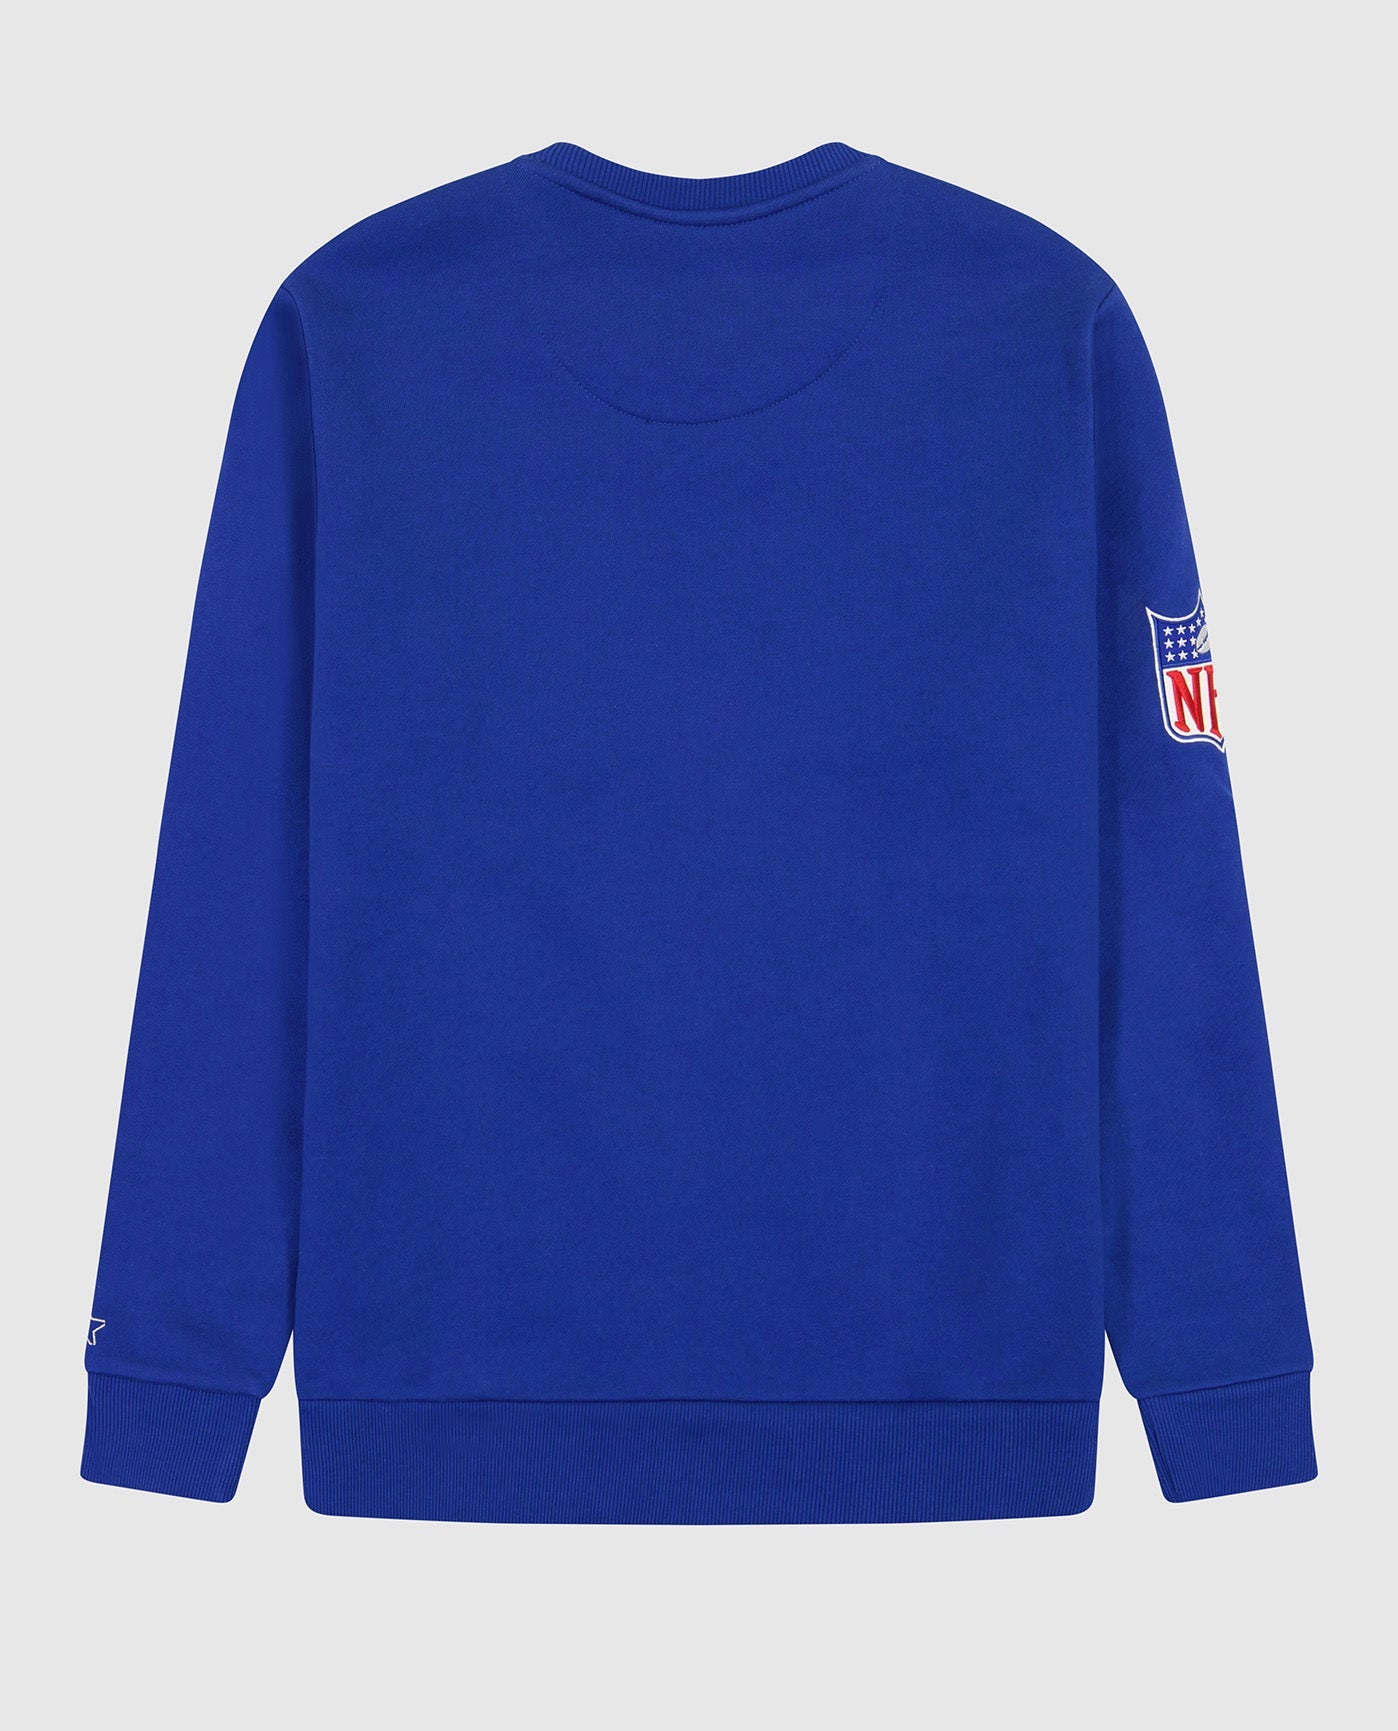 Back of New England Patriots Crew Neck Sweatshirt | Patriots Blue